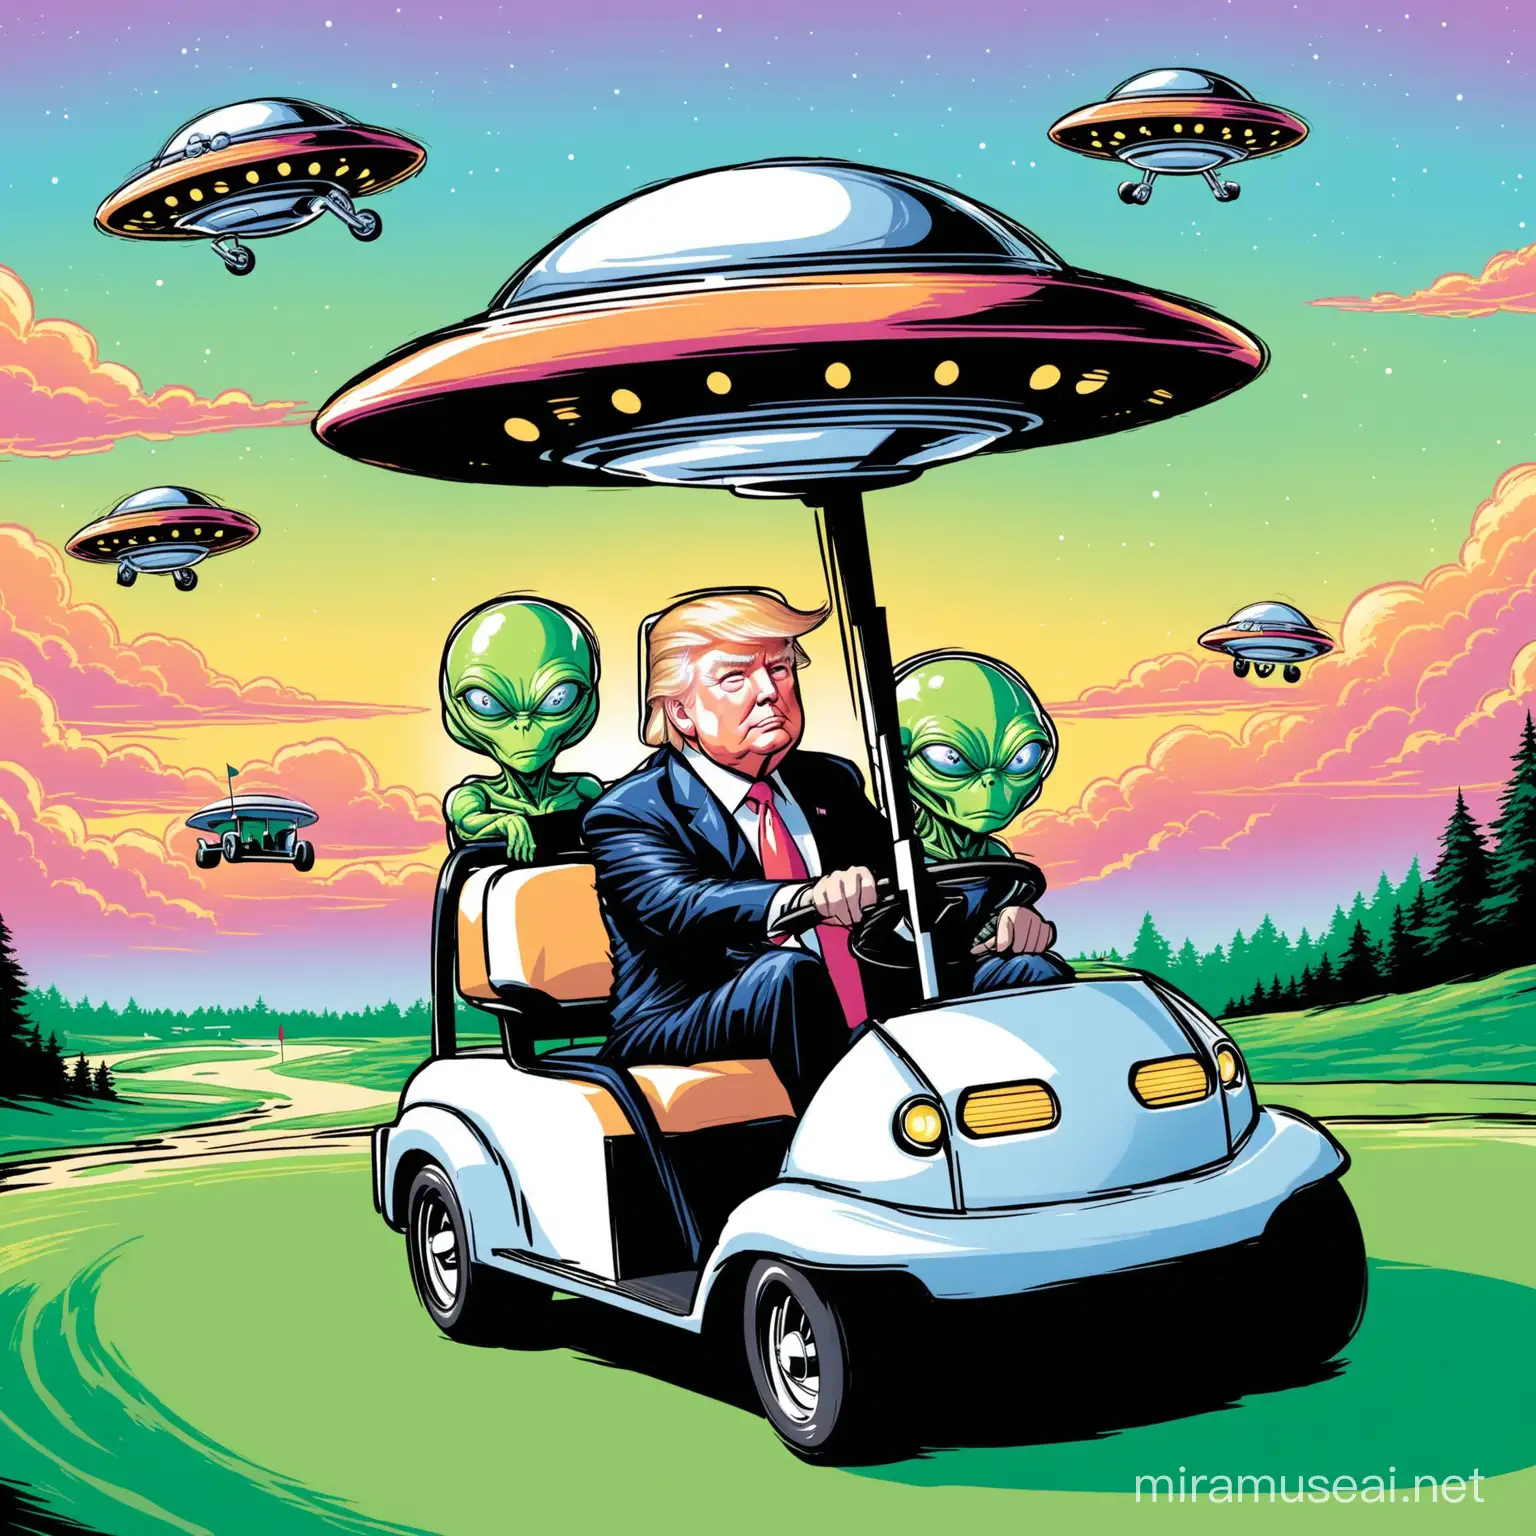 Former President Trump Golfs with Alien Friends in UFOShaped Cart